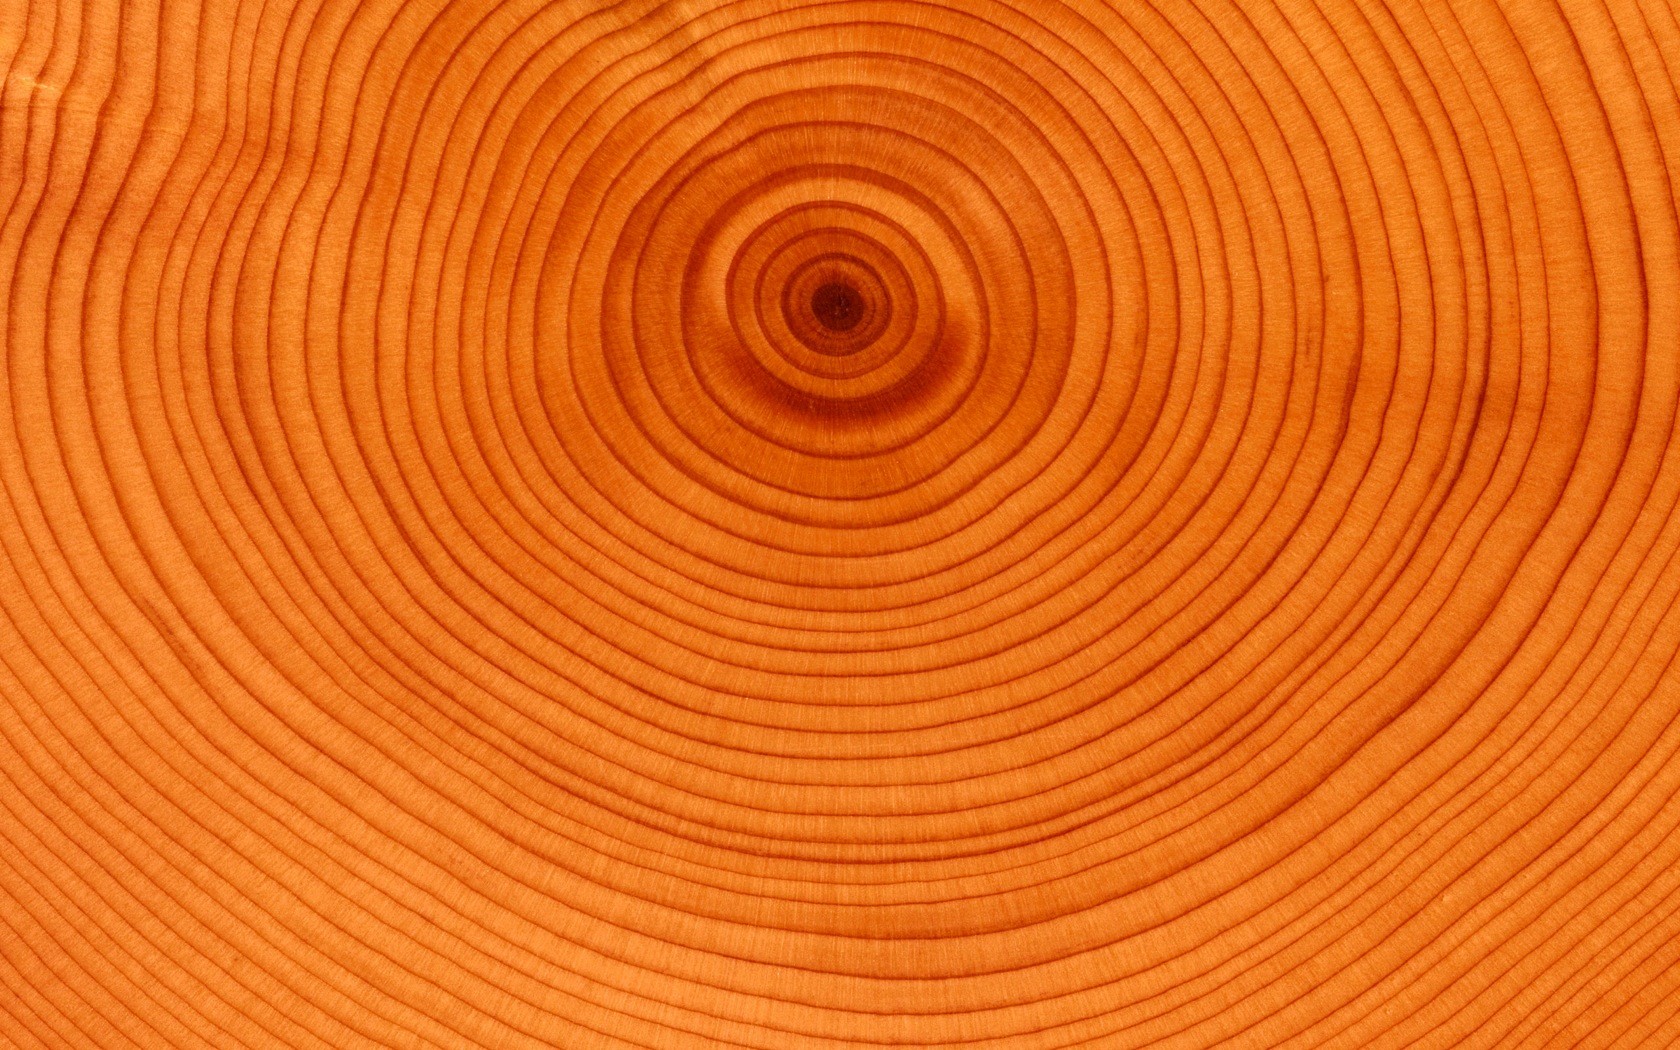 General 1680x1050 nature wood texture orange circle minimalism